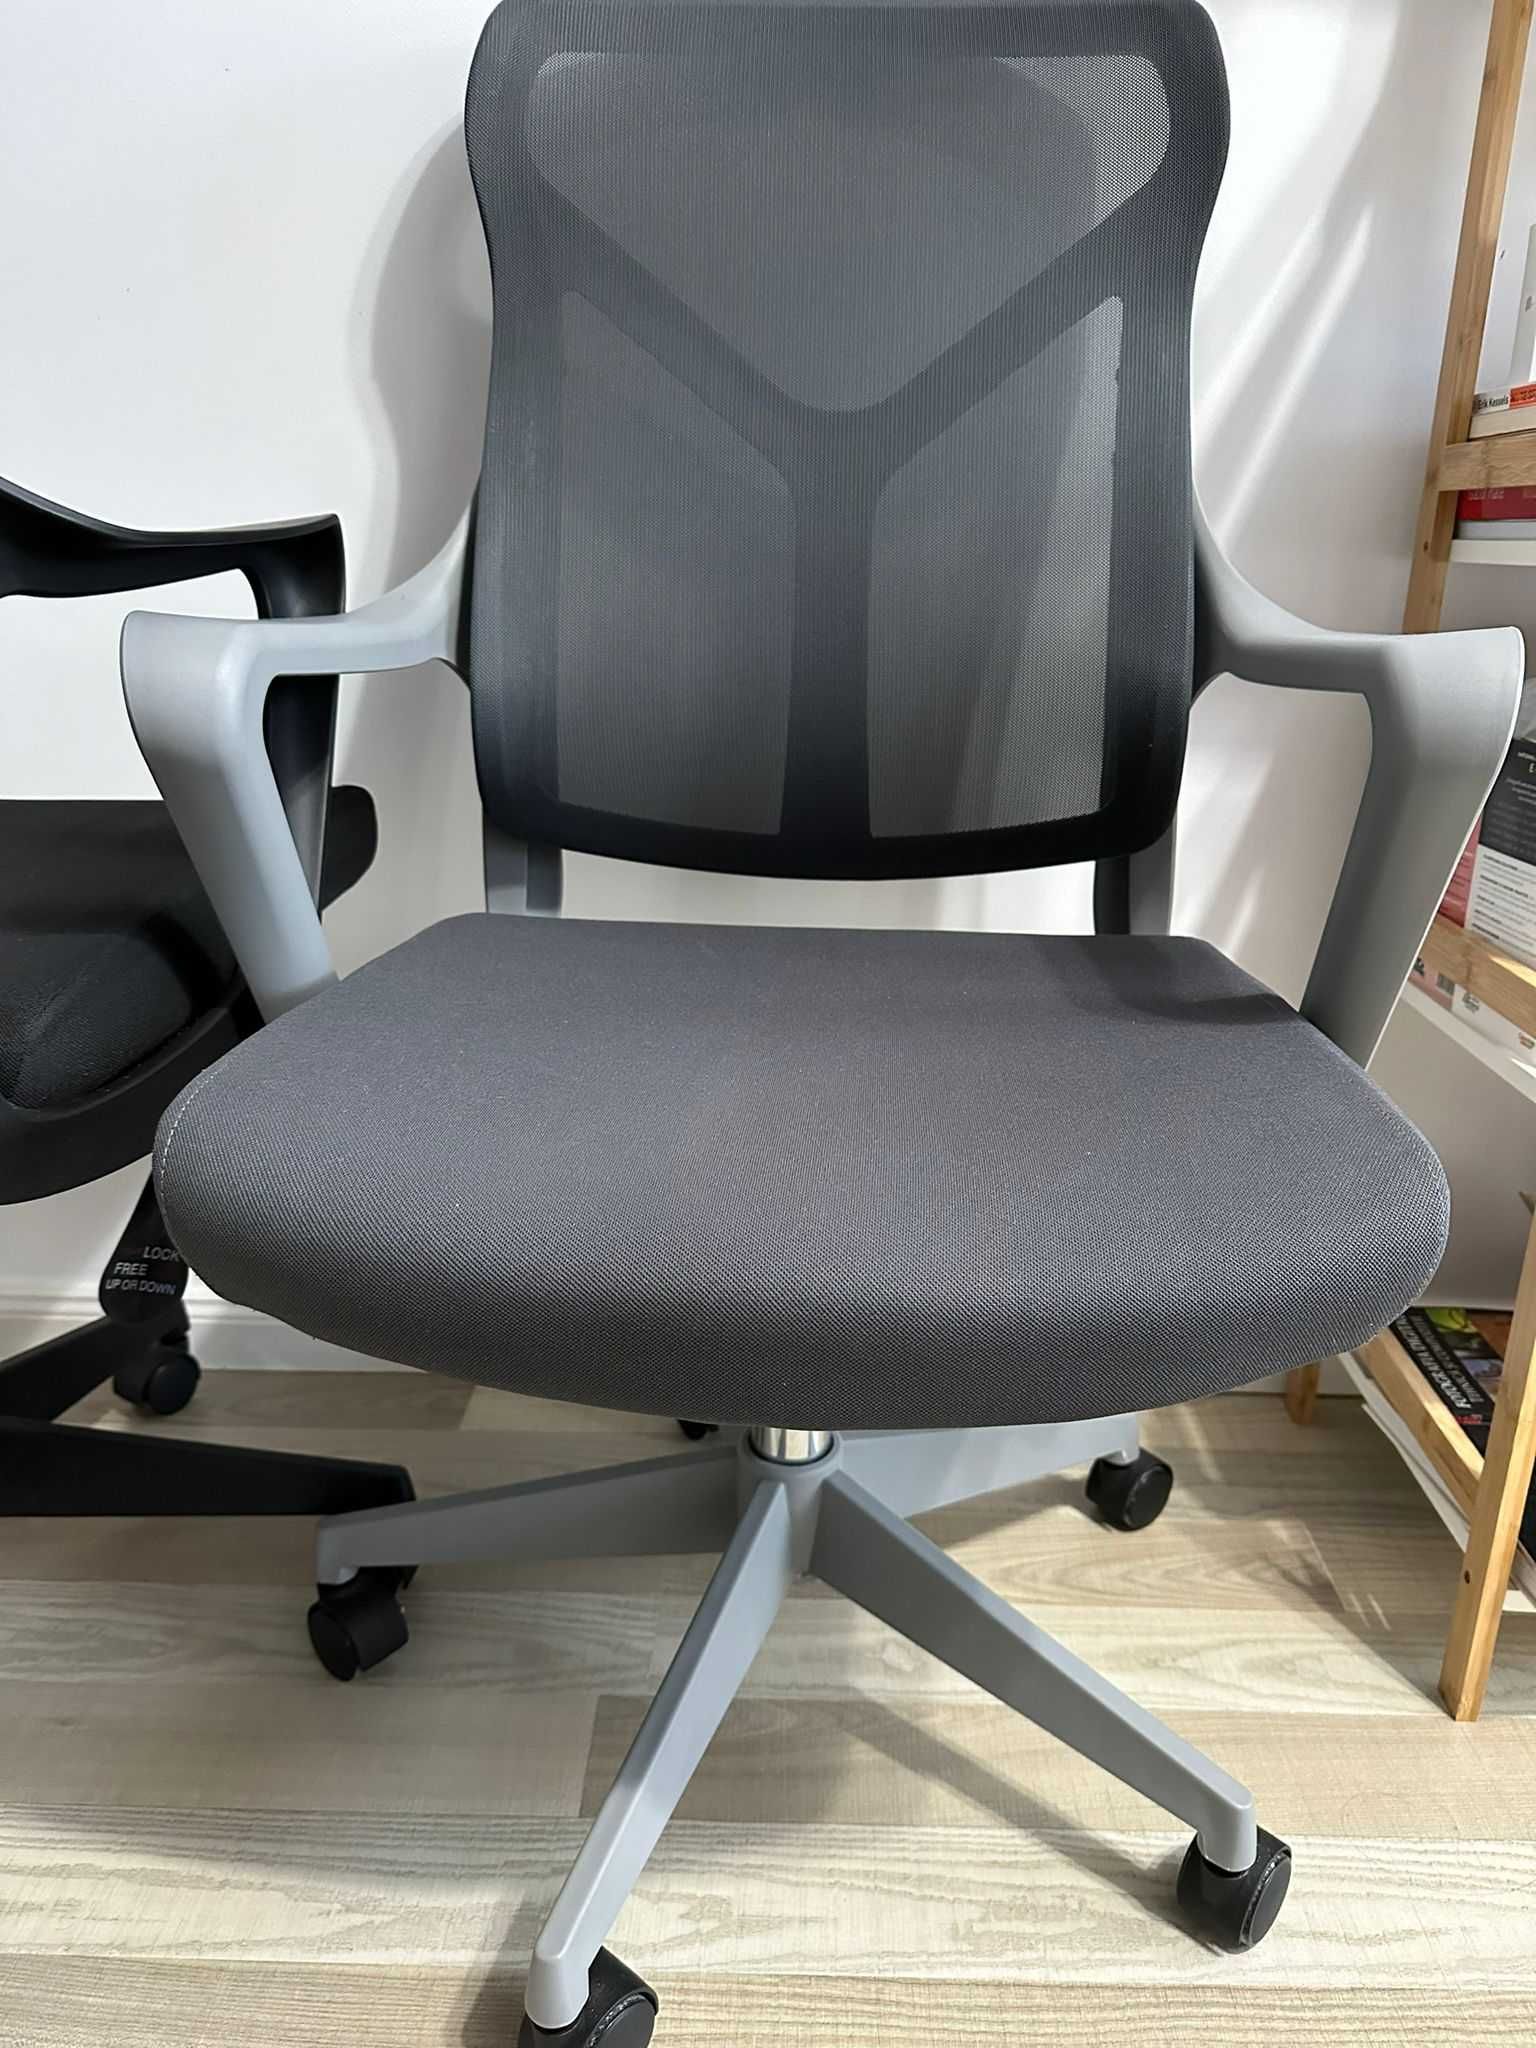 Scaun ergonomic de birou, tapitat cu stofa marca Somproduct - 2 bucati